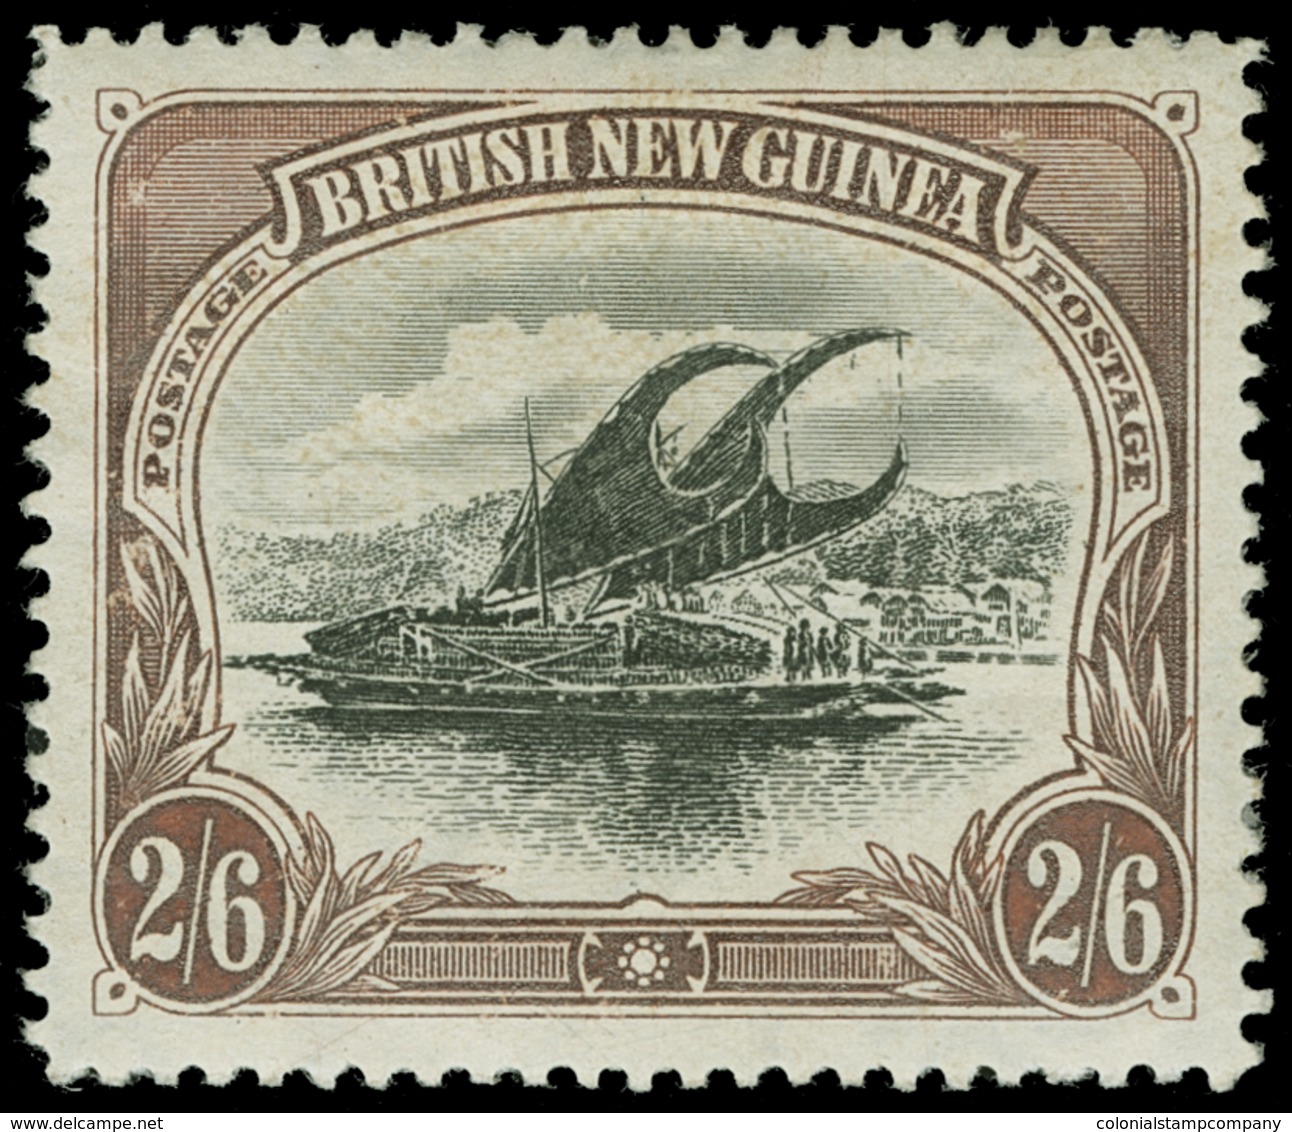 * Papua New Guinea - Lot No.866 - Papua New Guinea